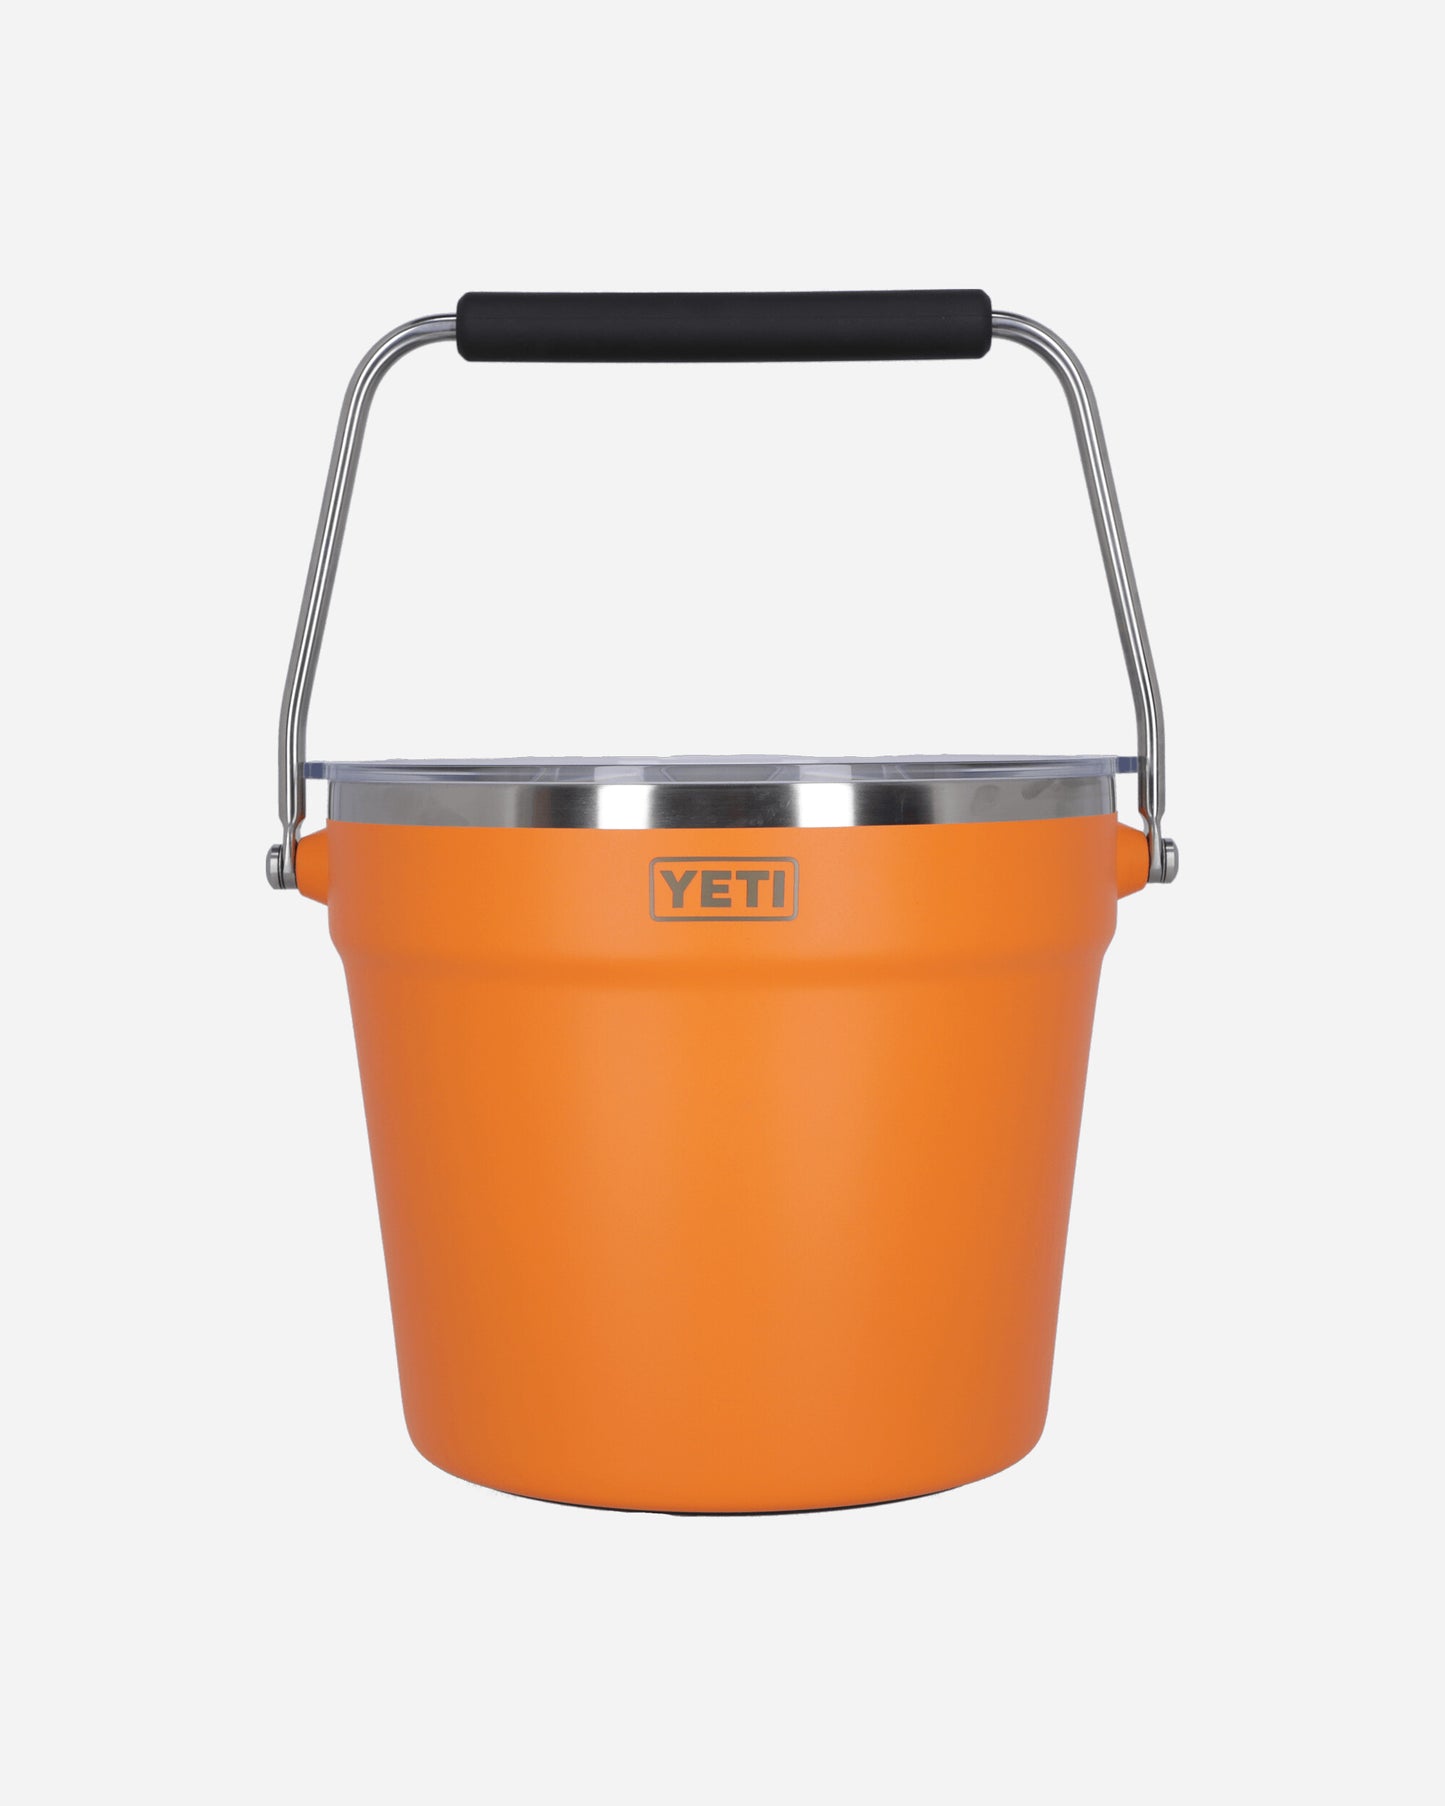 YETI Beverage Bucket King Crab Orange Equipment Camping Gear 830 KCO